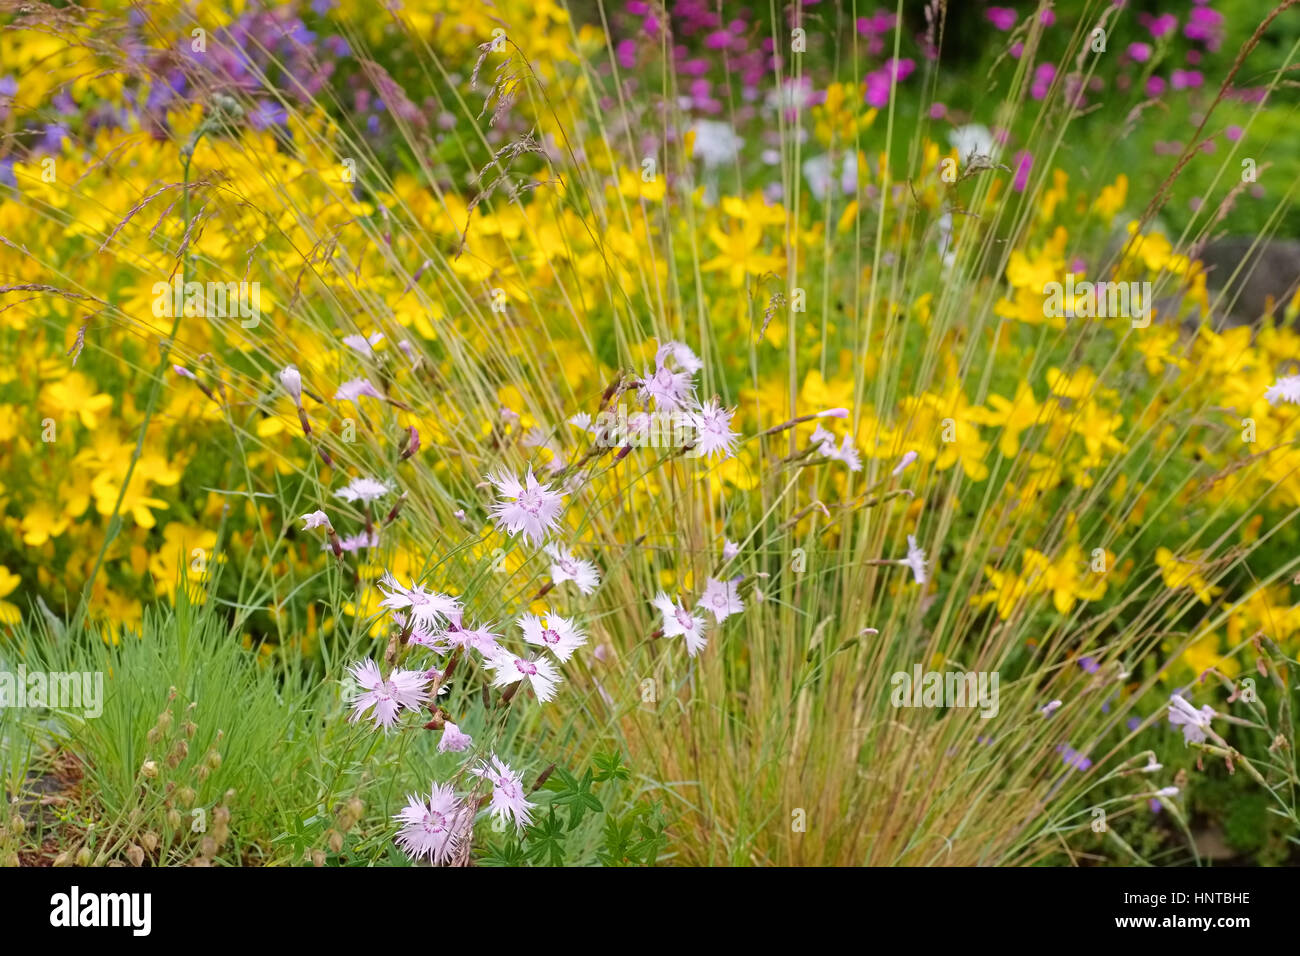 Olymp-Johanniskraut und Feder-Nelke - Hypericum olympicum and Dianthus plumarius, small wildflowers Stock Photo